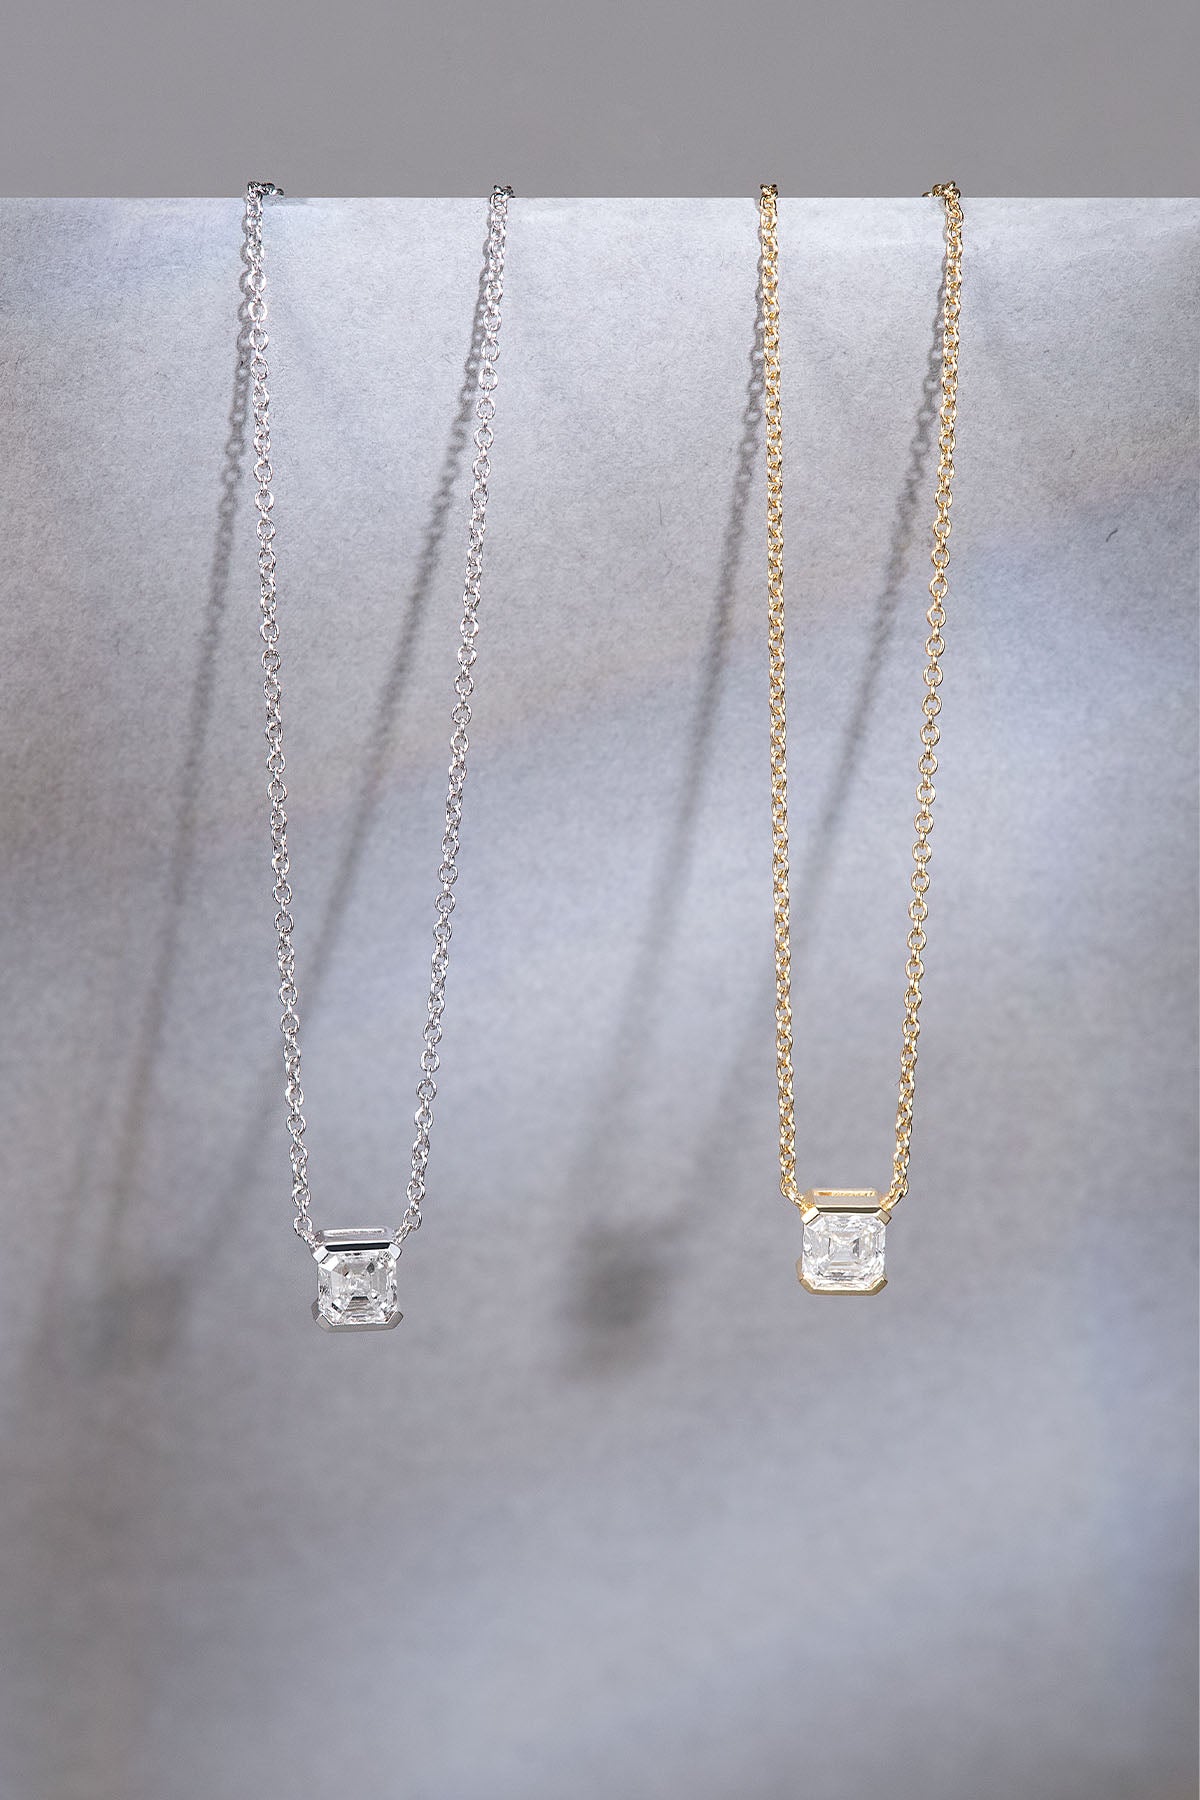 Asscher Diamond Necklace (0.35ct) - APM Monaco UK